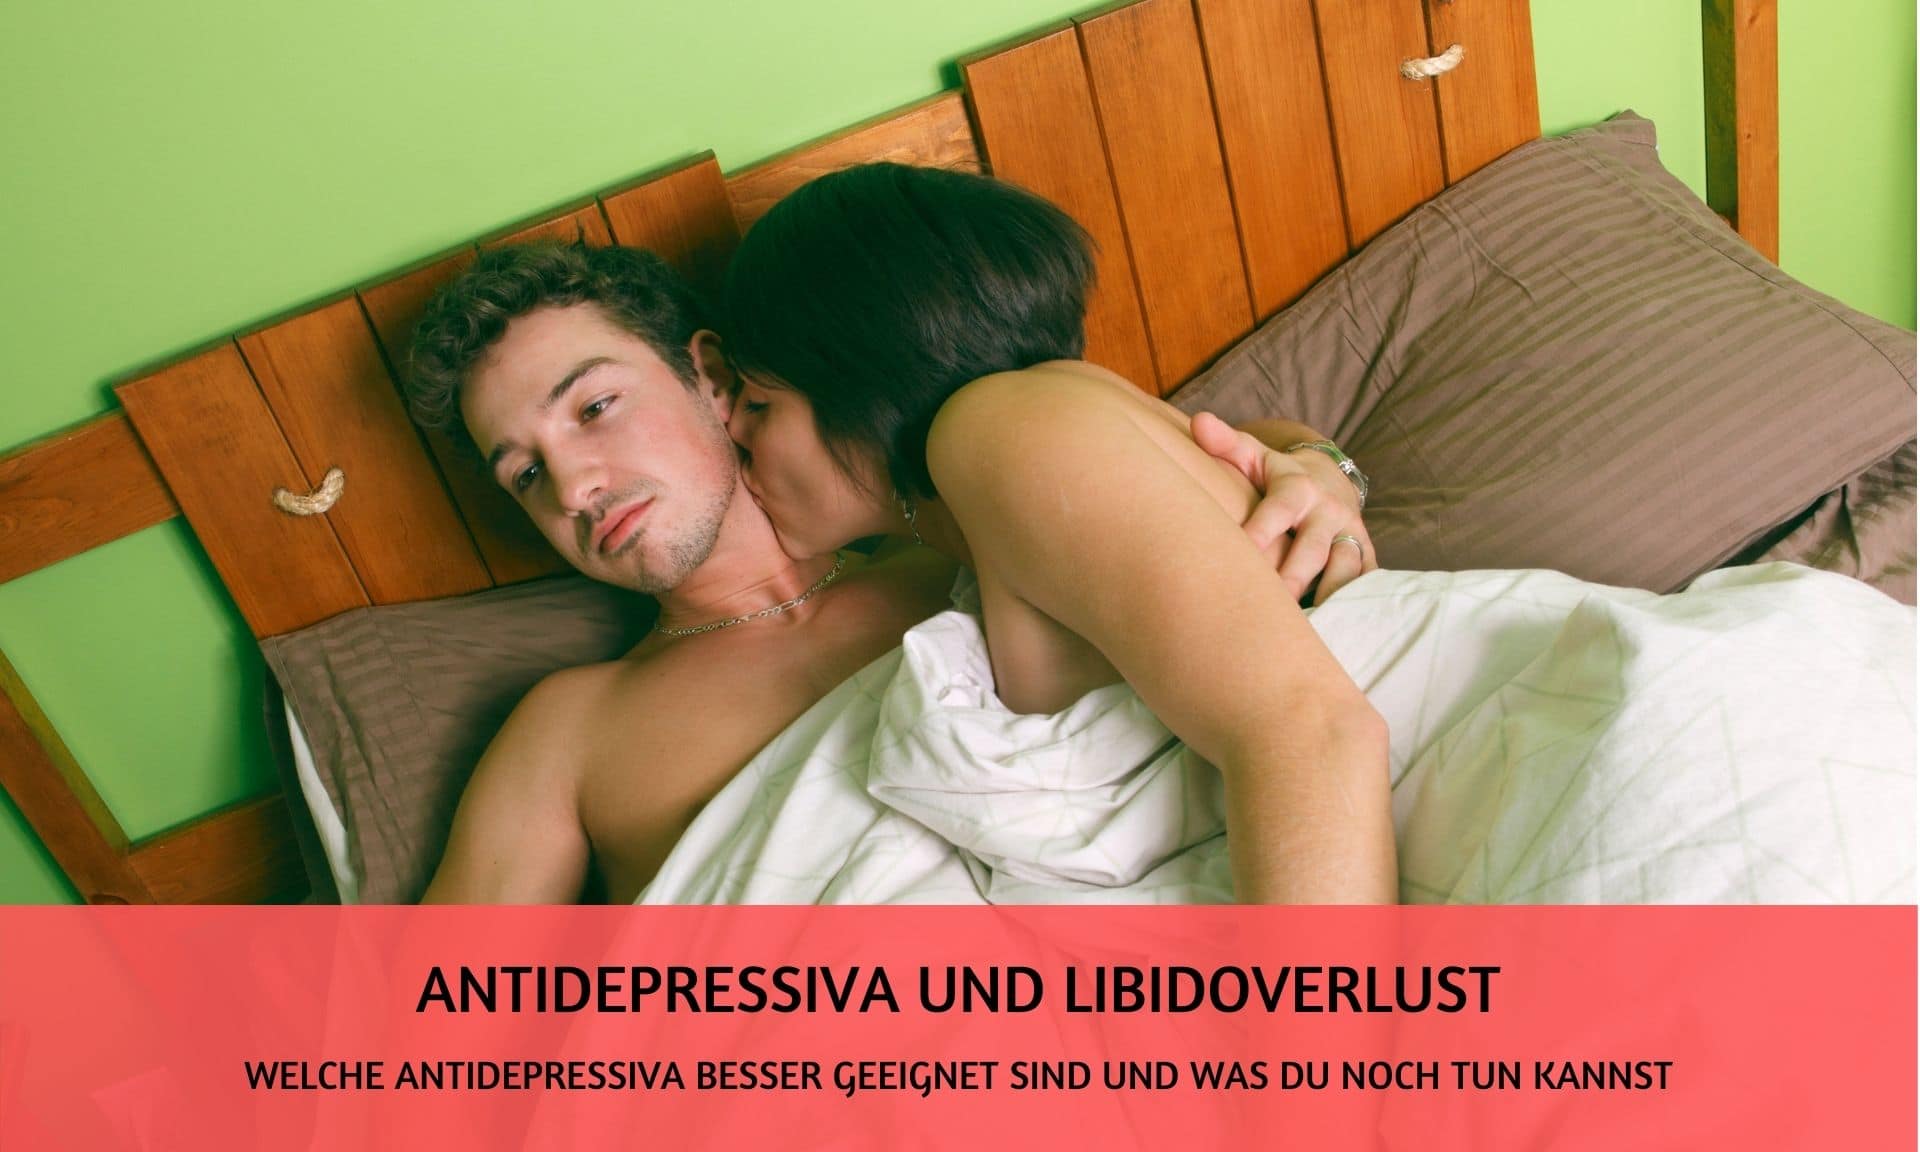 Antidepressiva und Libidoverlust